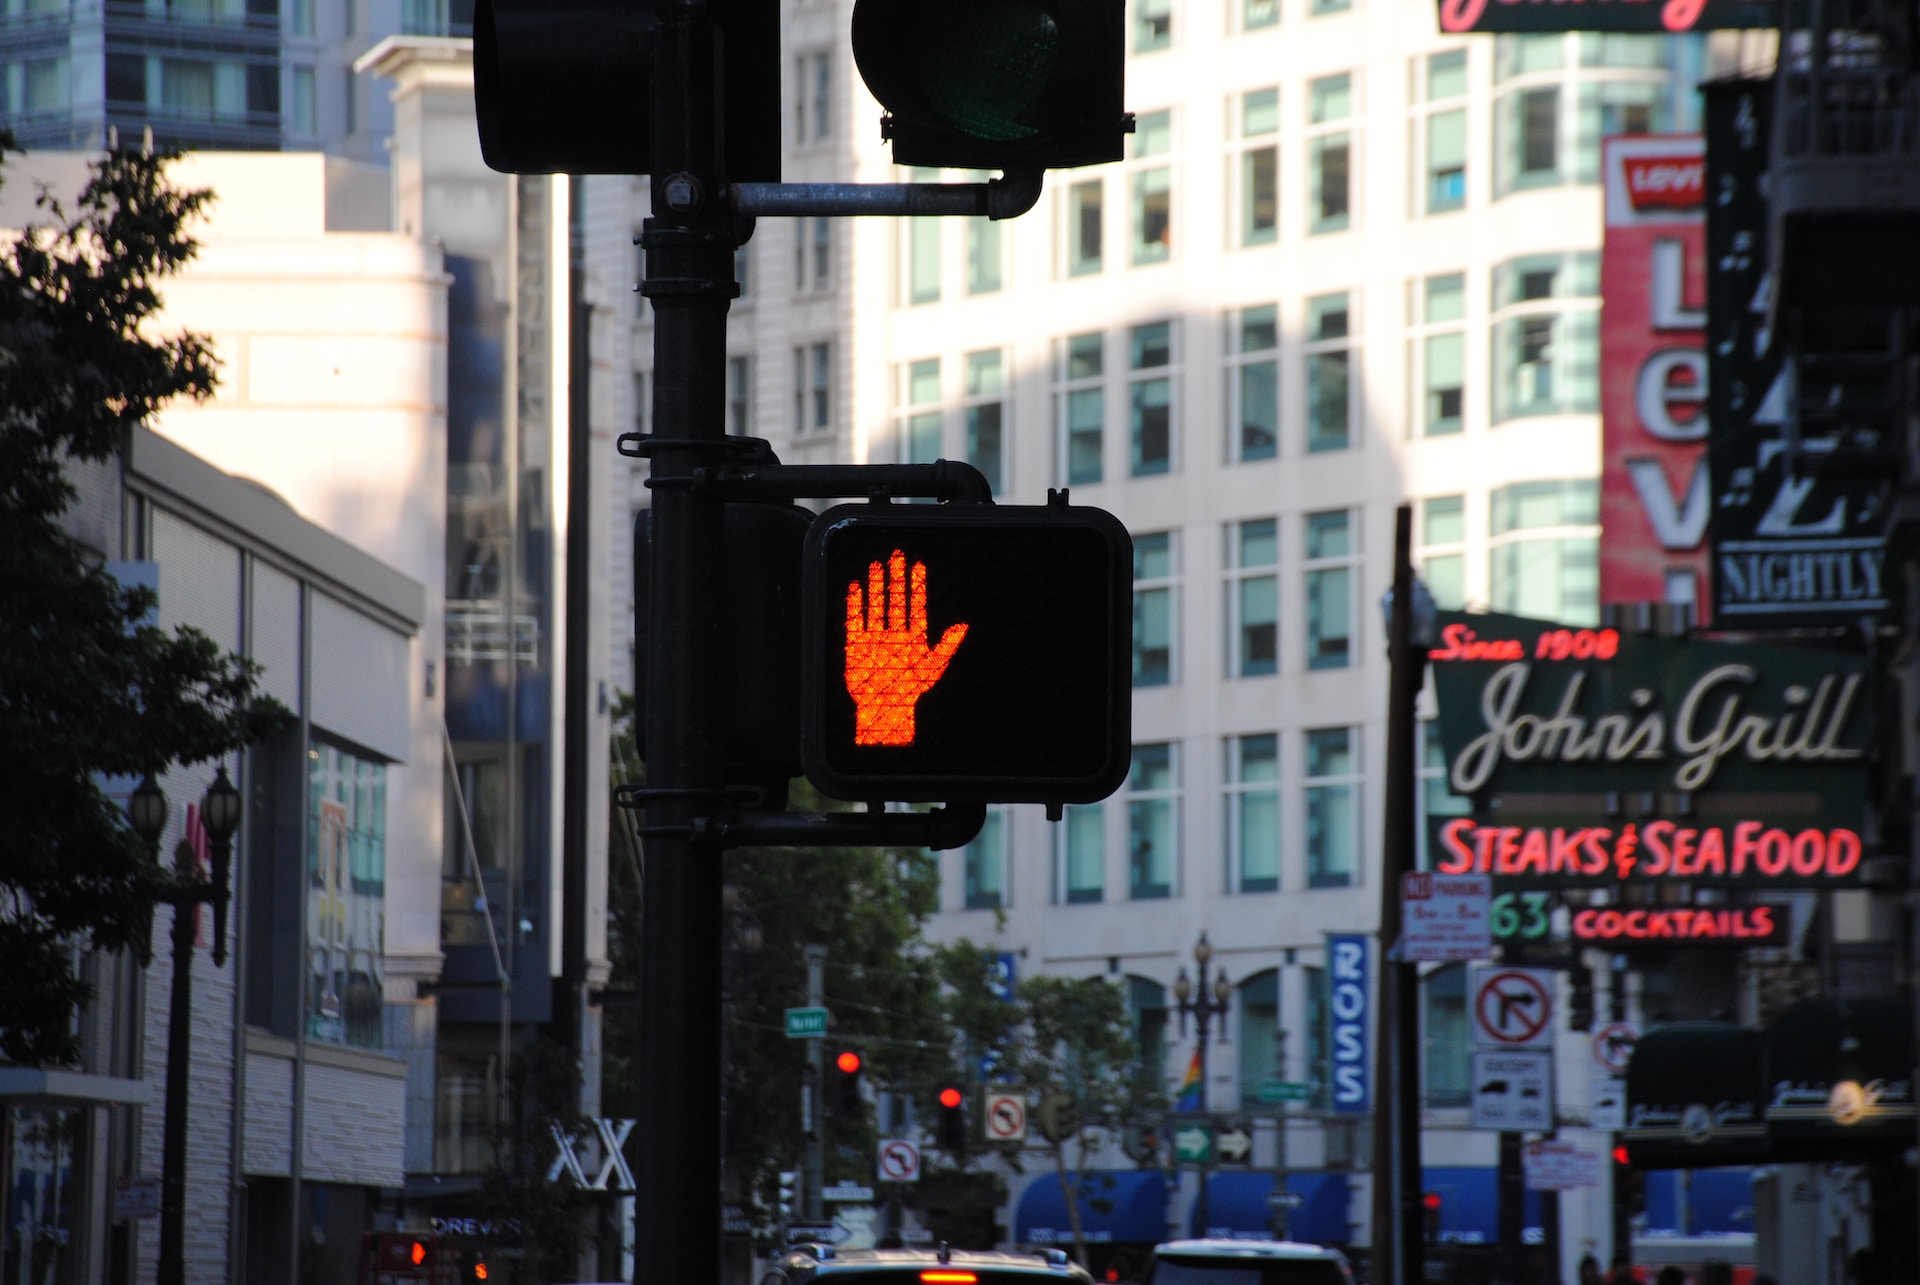 Stop sign traffic light